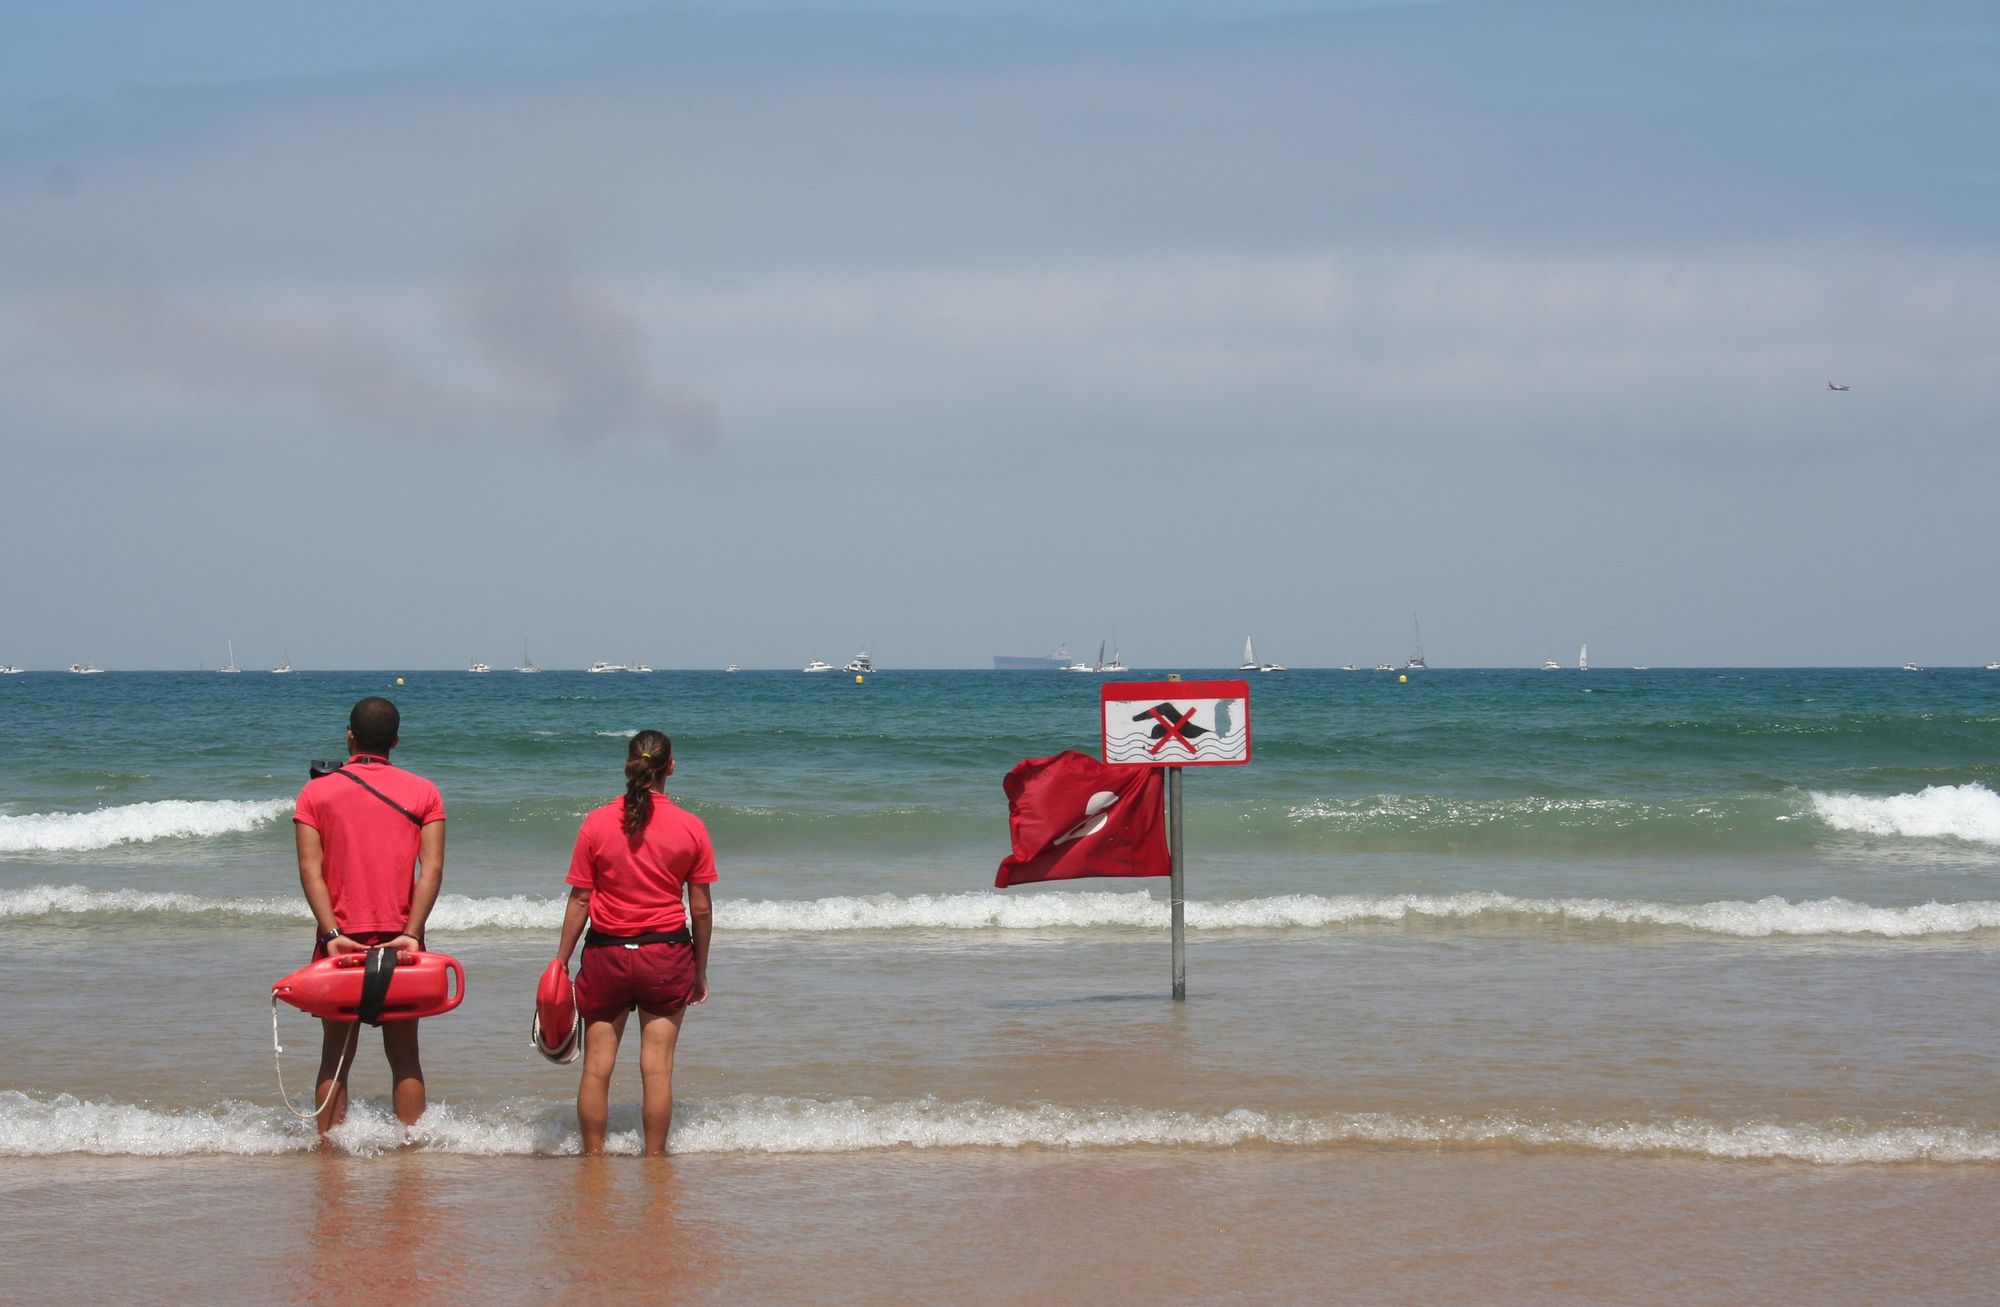 Lifeguards standing on a beach.